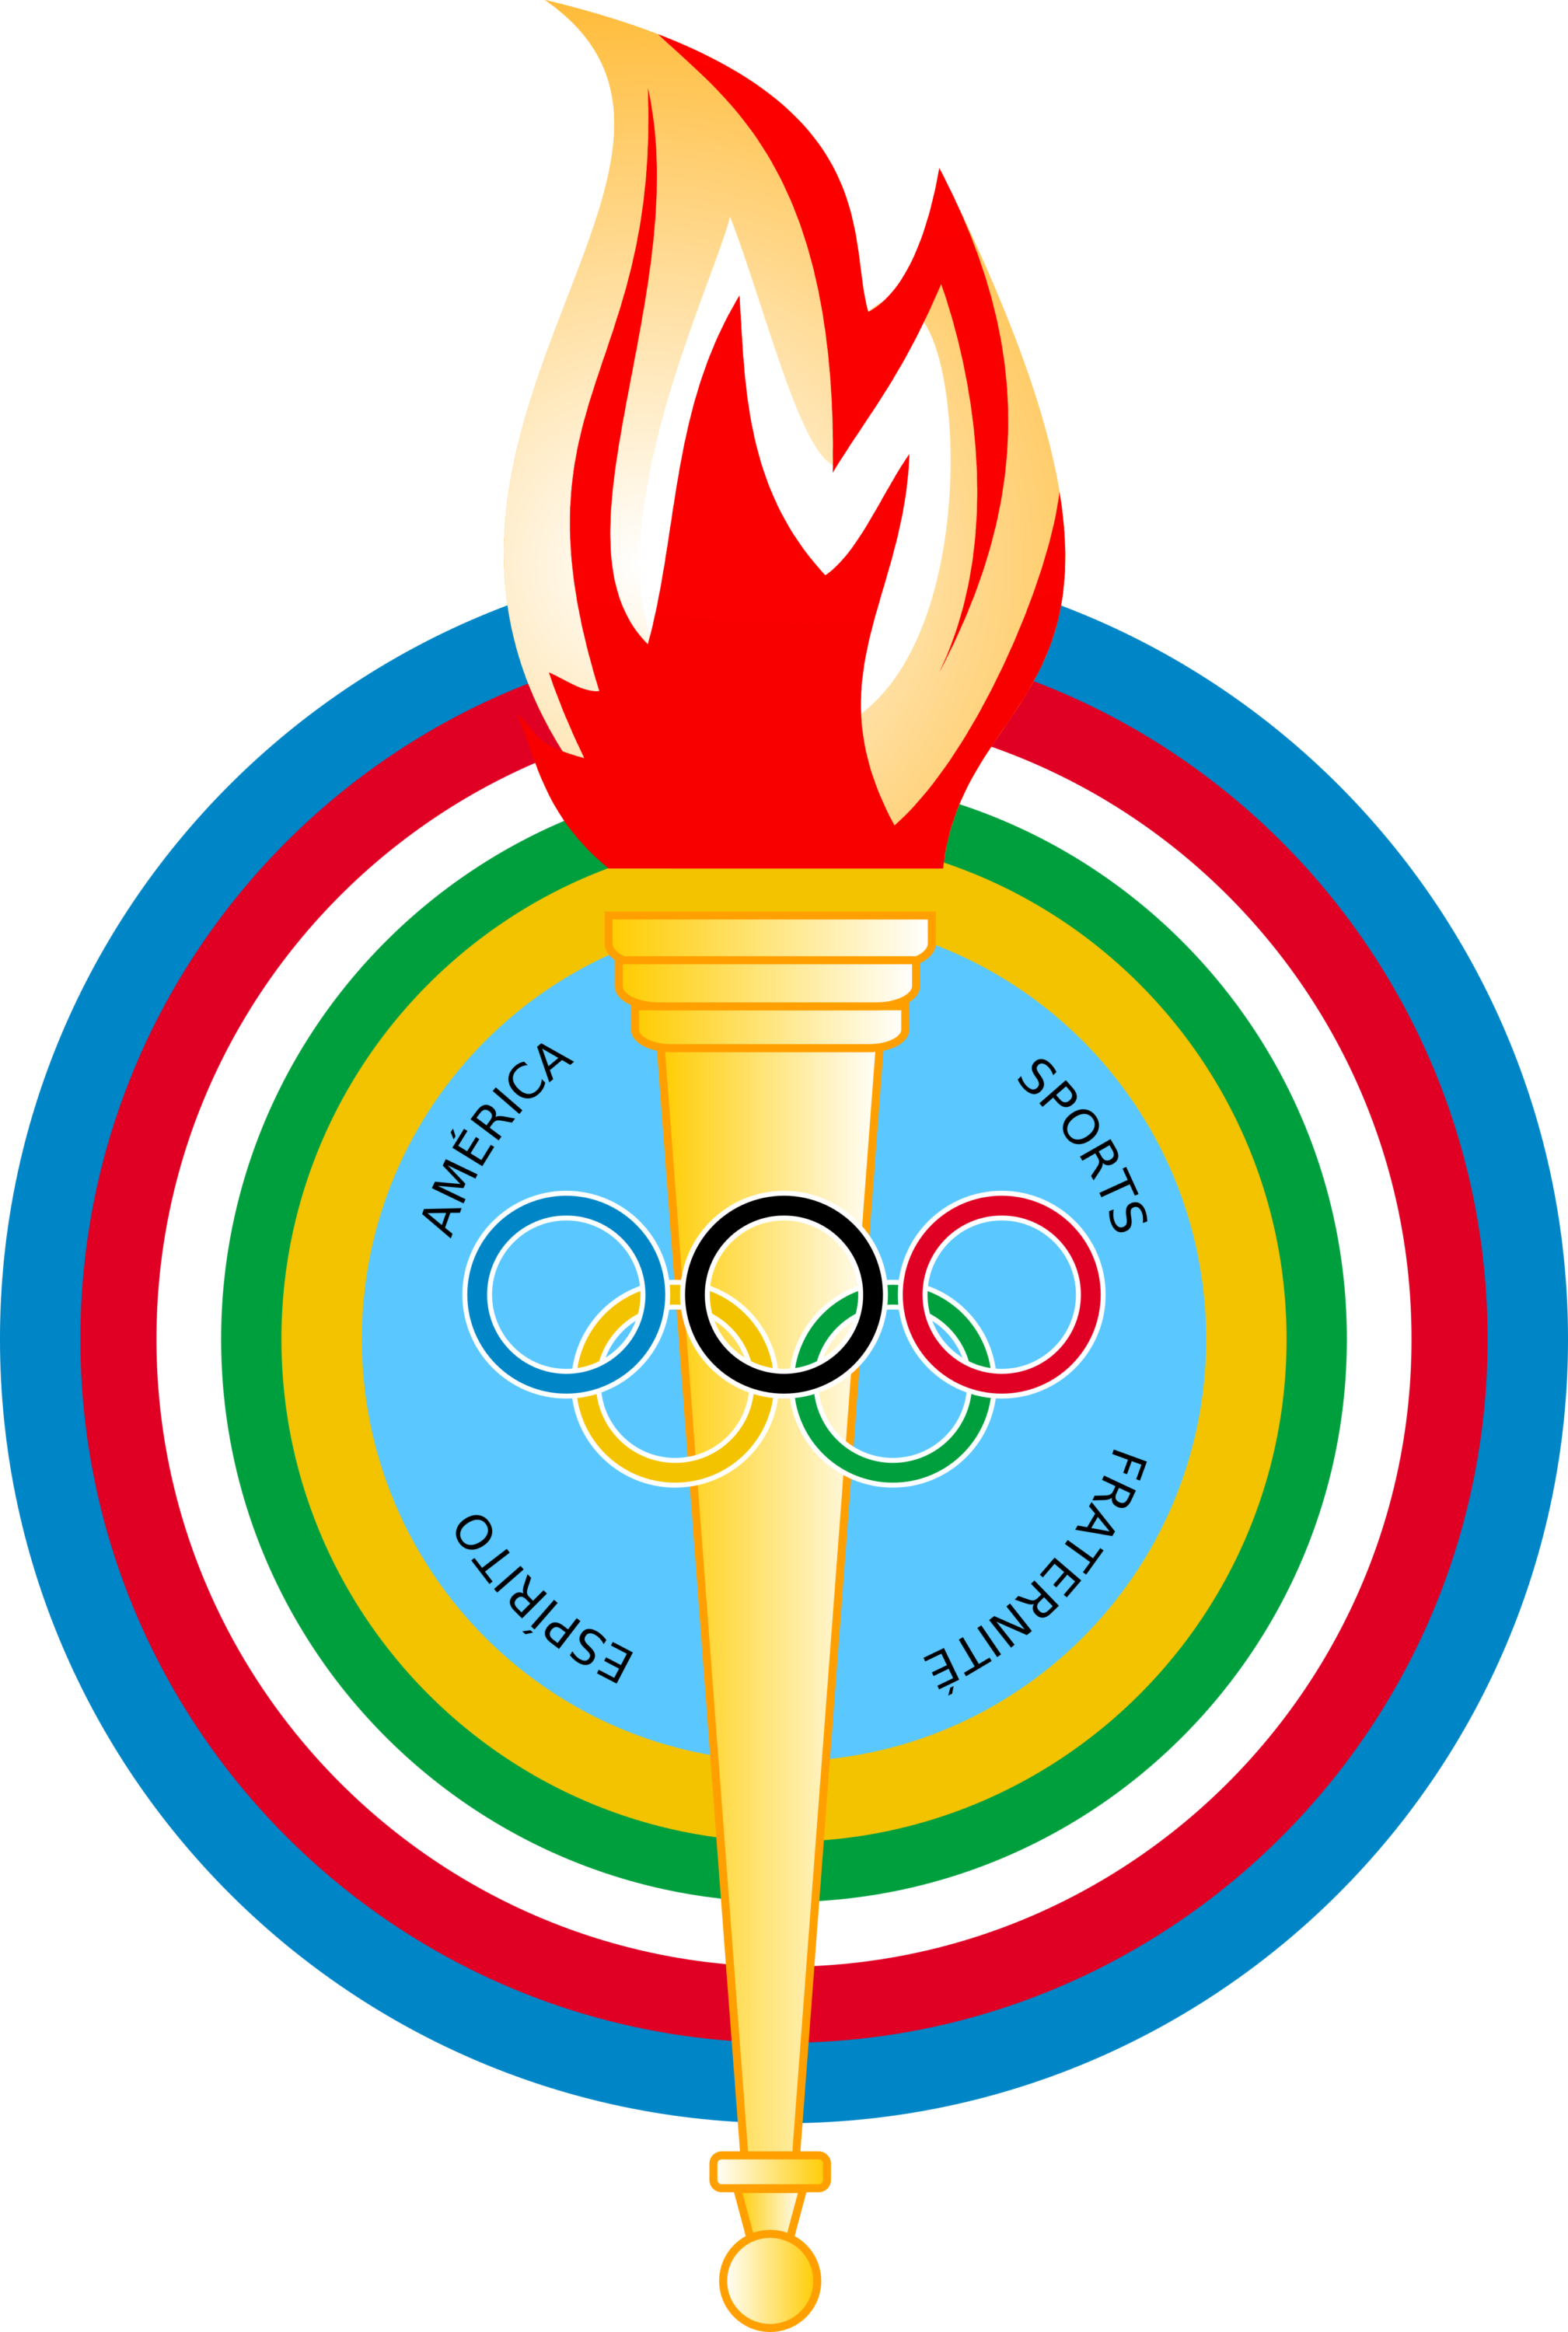 Pan American Games Logos Download